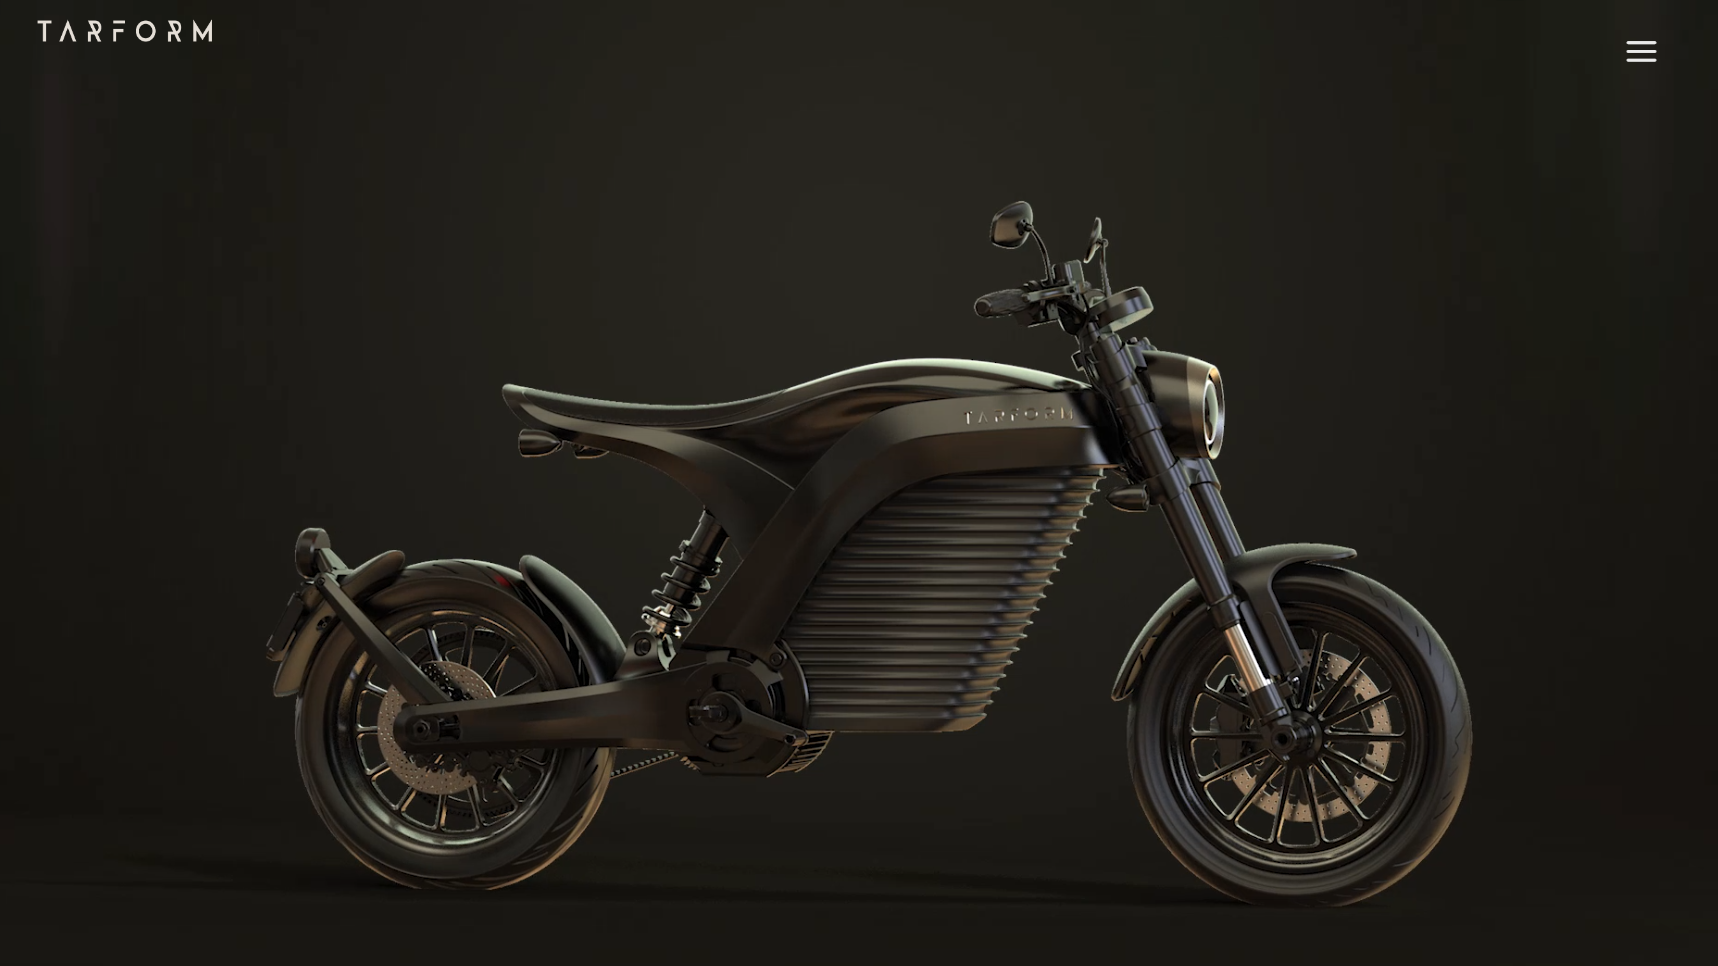 Tarform Motorcycles - Electric Motorcycle Manufacturer